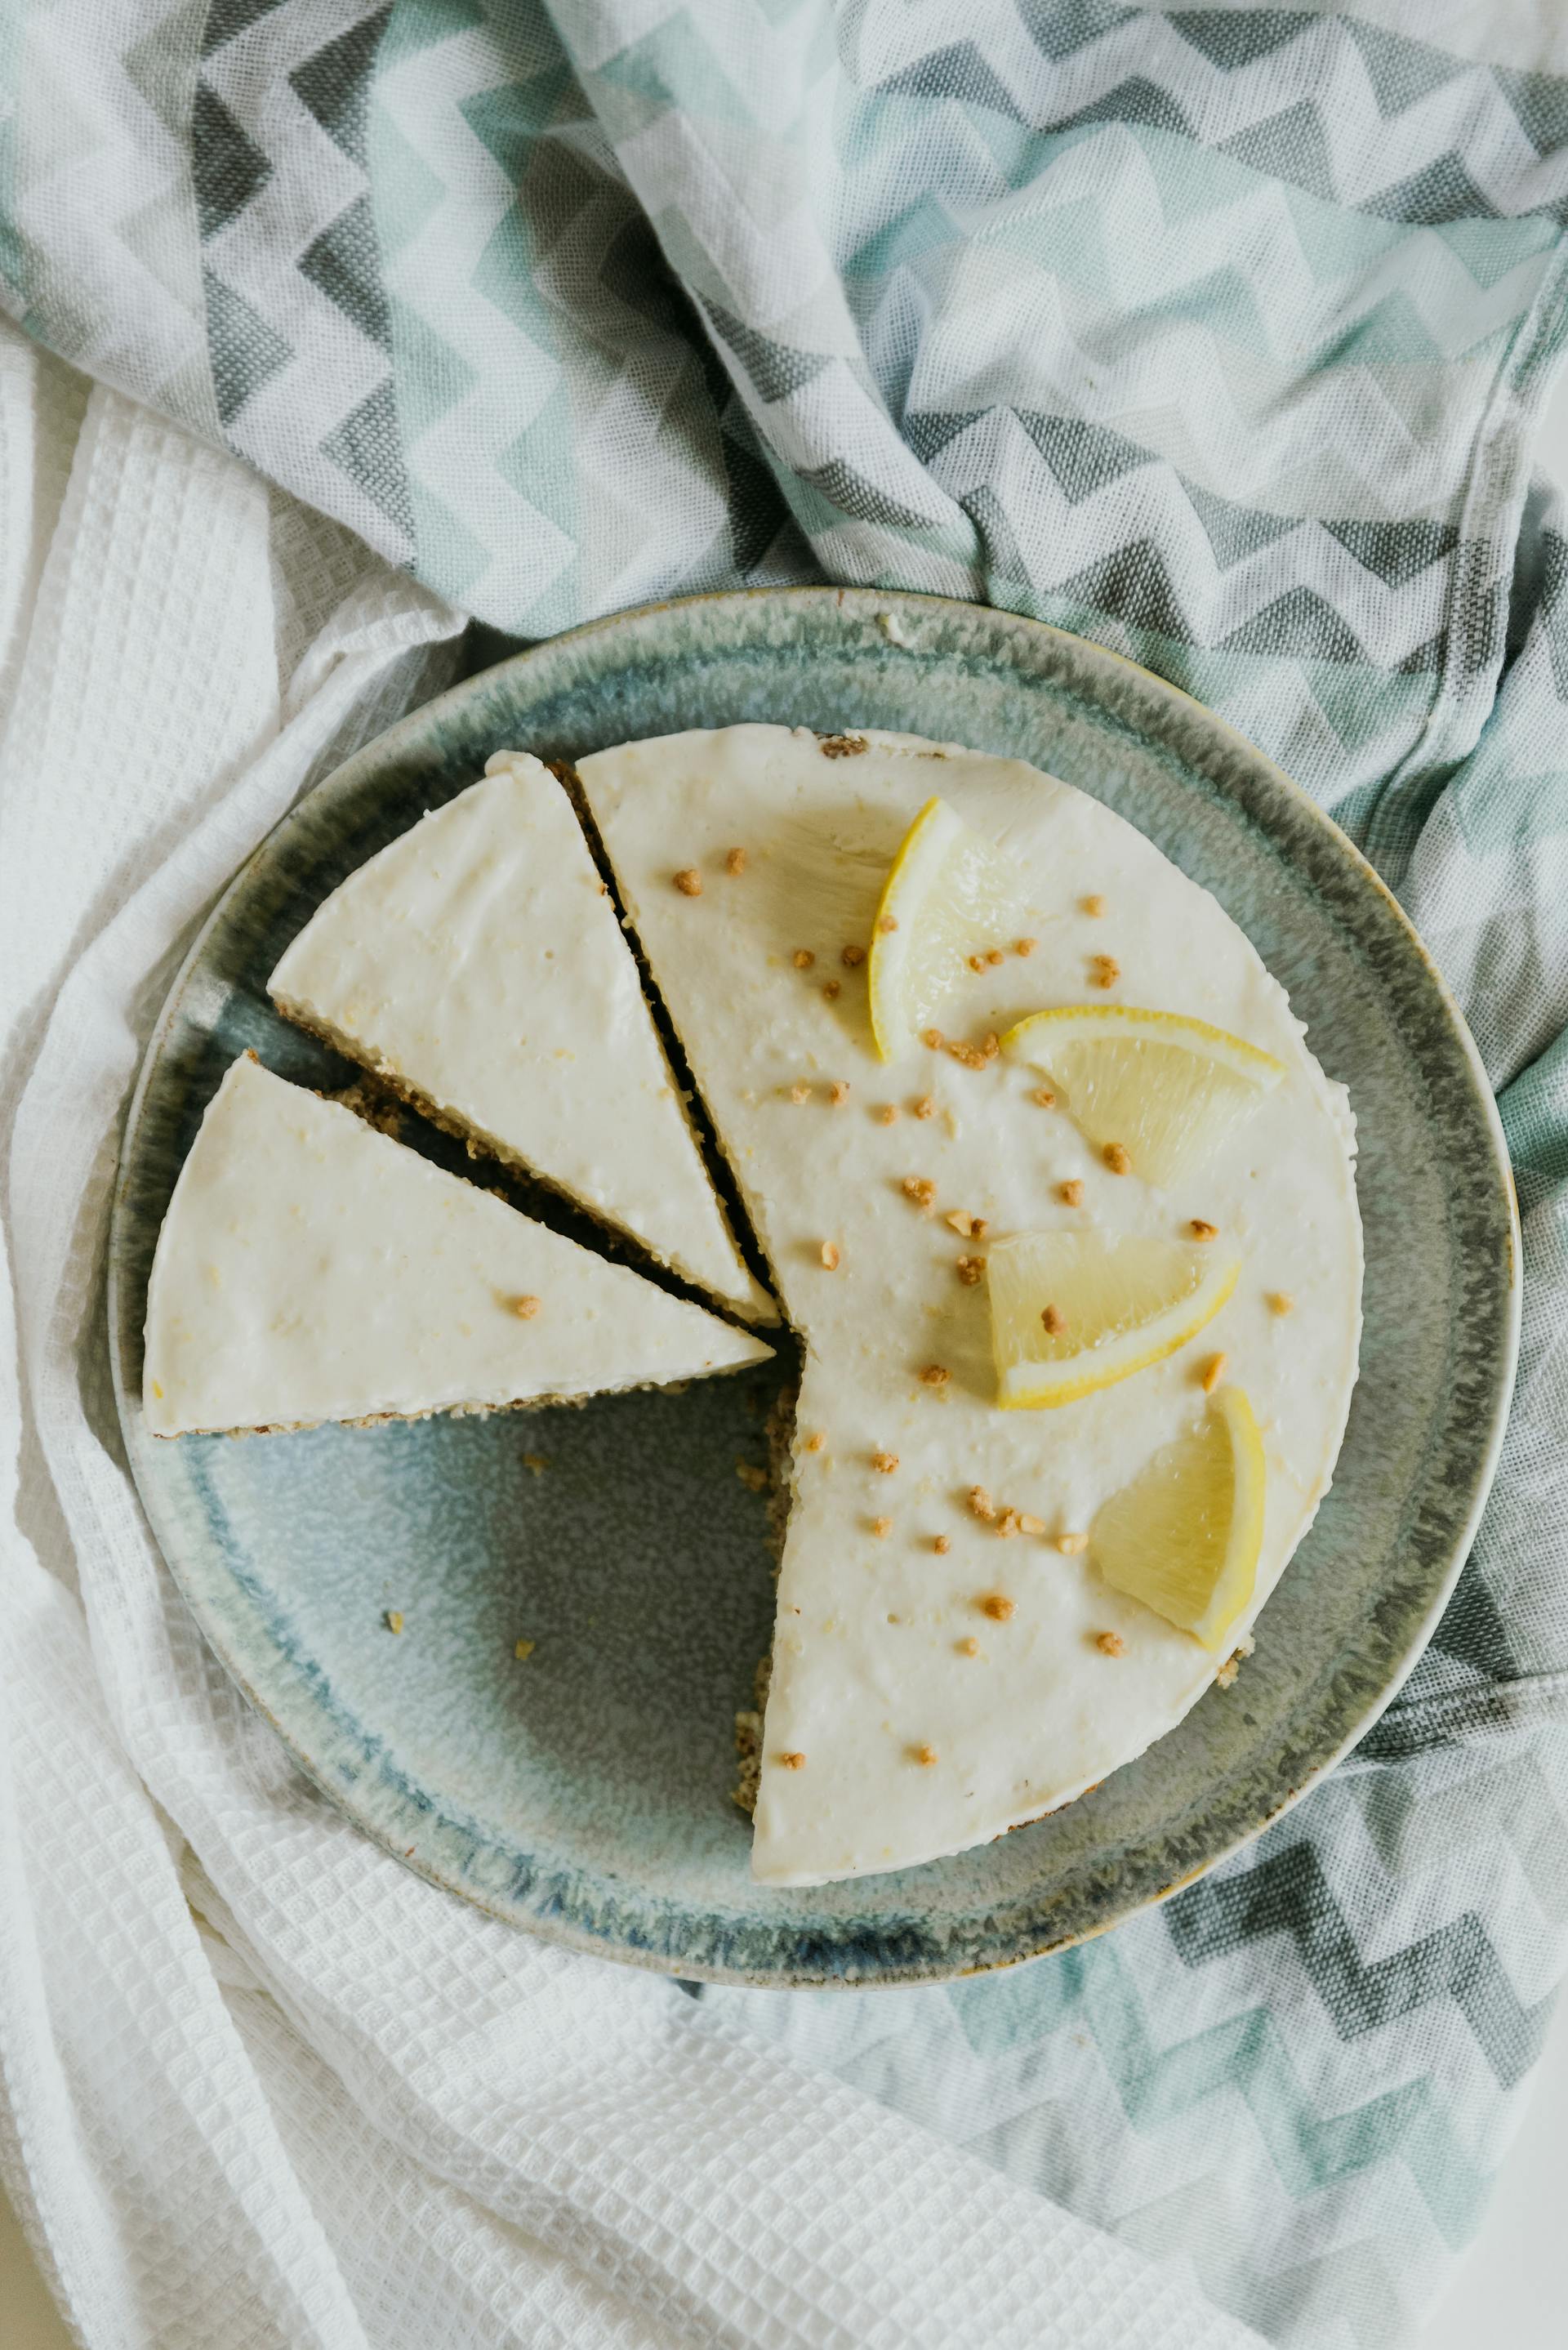 Lemon cheesecake on a plate | Source: Pexels